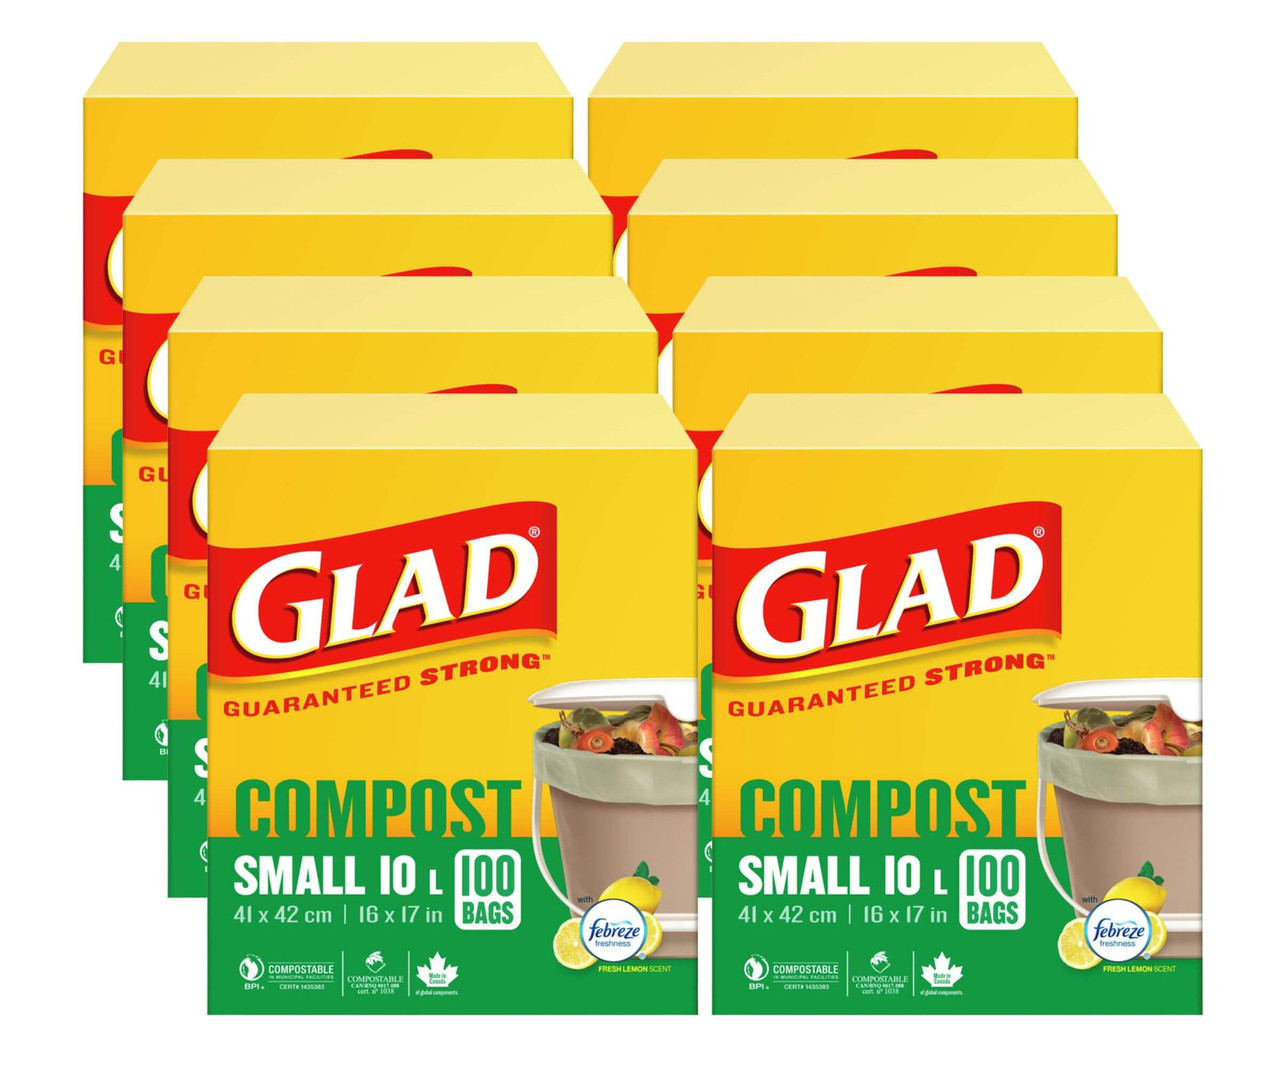 GLAD 100% Compostable Fresh Lemon Scent, 100 Bags - Small 10L(8/Case)-Chicken Pieces